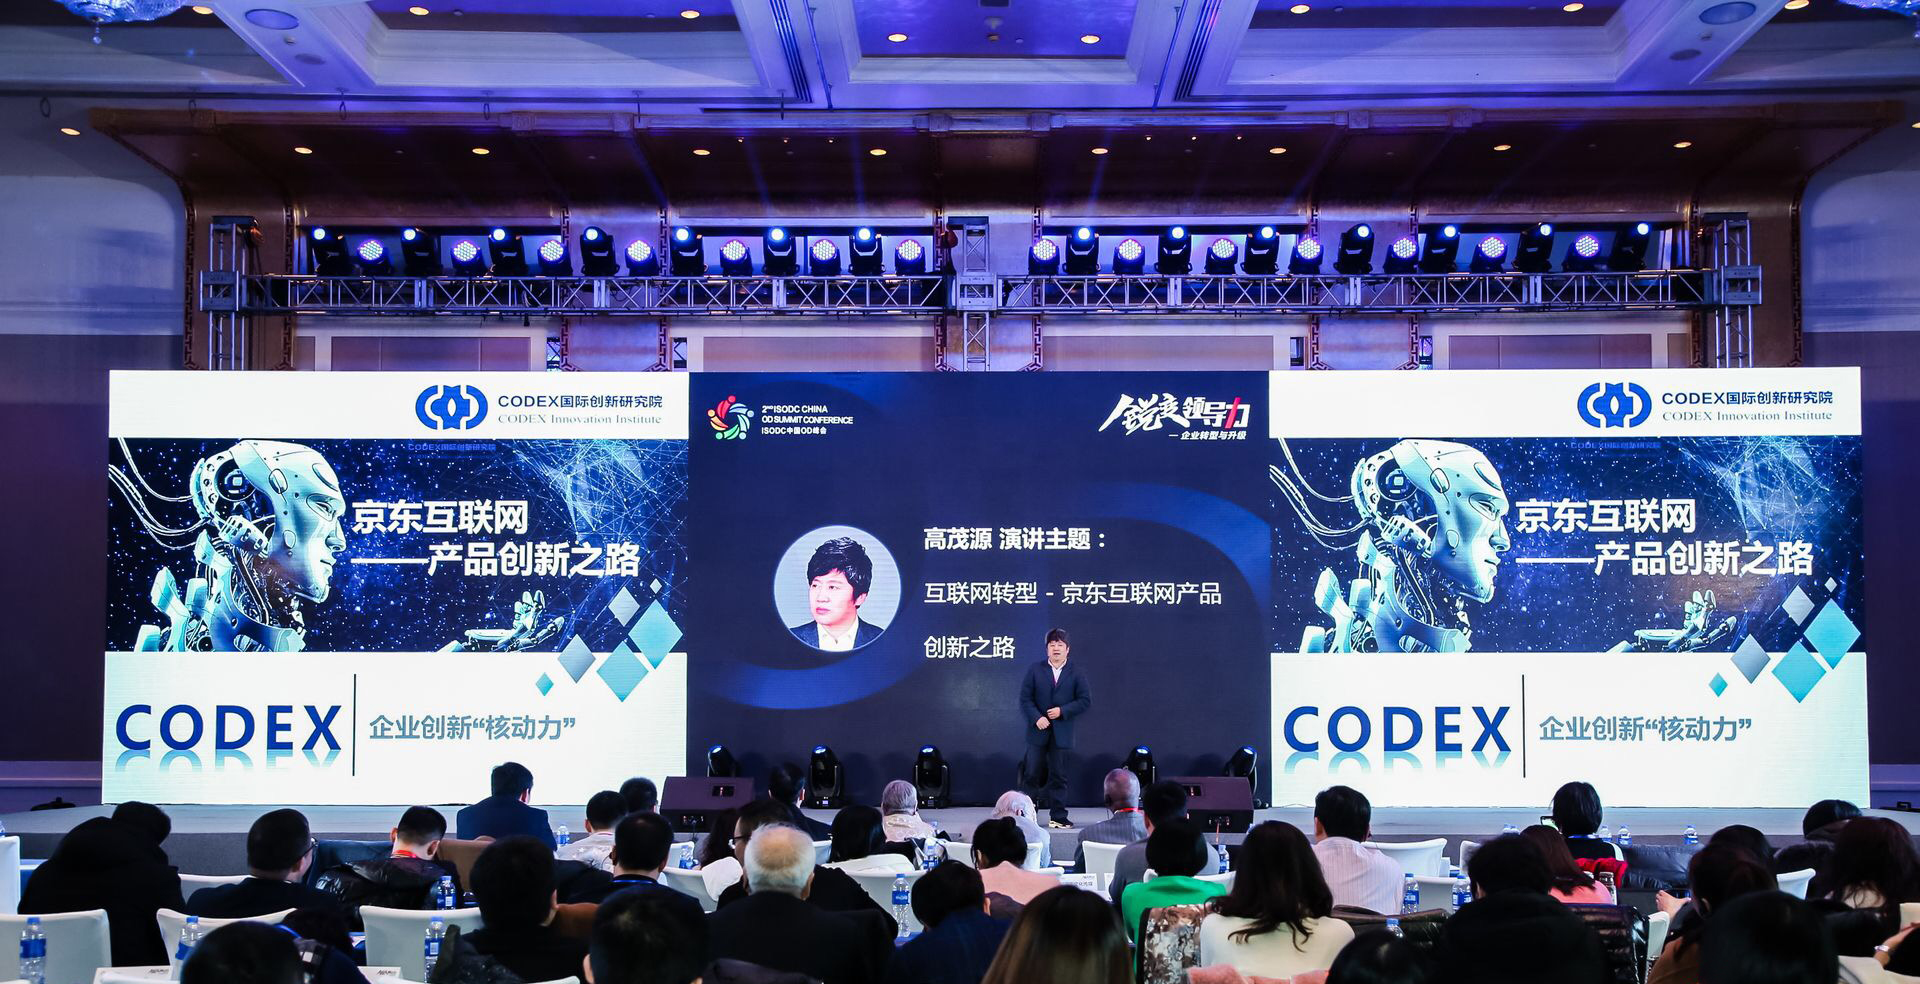 CODEX院长高茂源先生在中国OD峰会上演讲《京东互联网-产品创新之路》